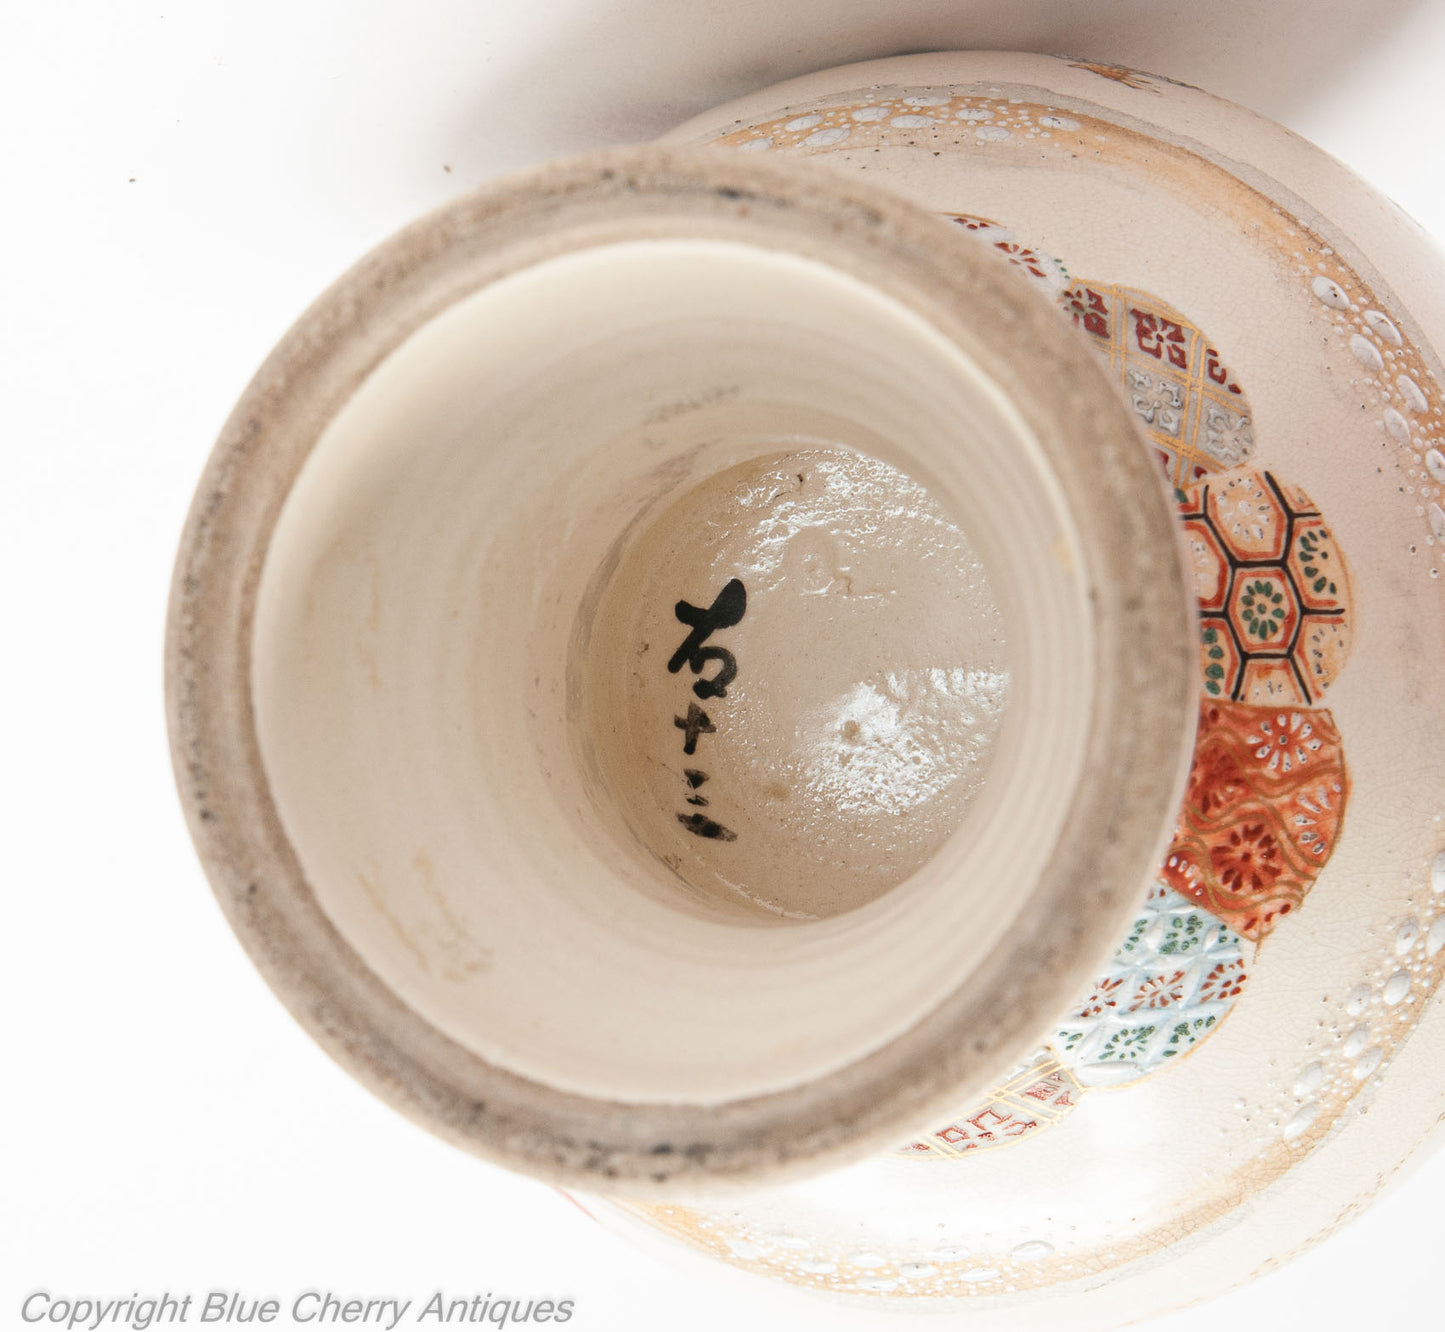 Antique Meiji Japanese Awata Yaki Satsuma Pottery Vase with Children at Play (Code 1971)